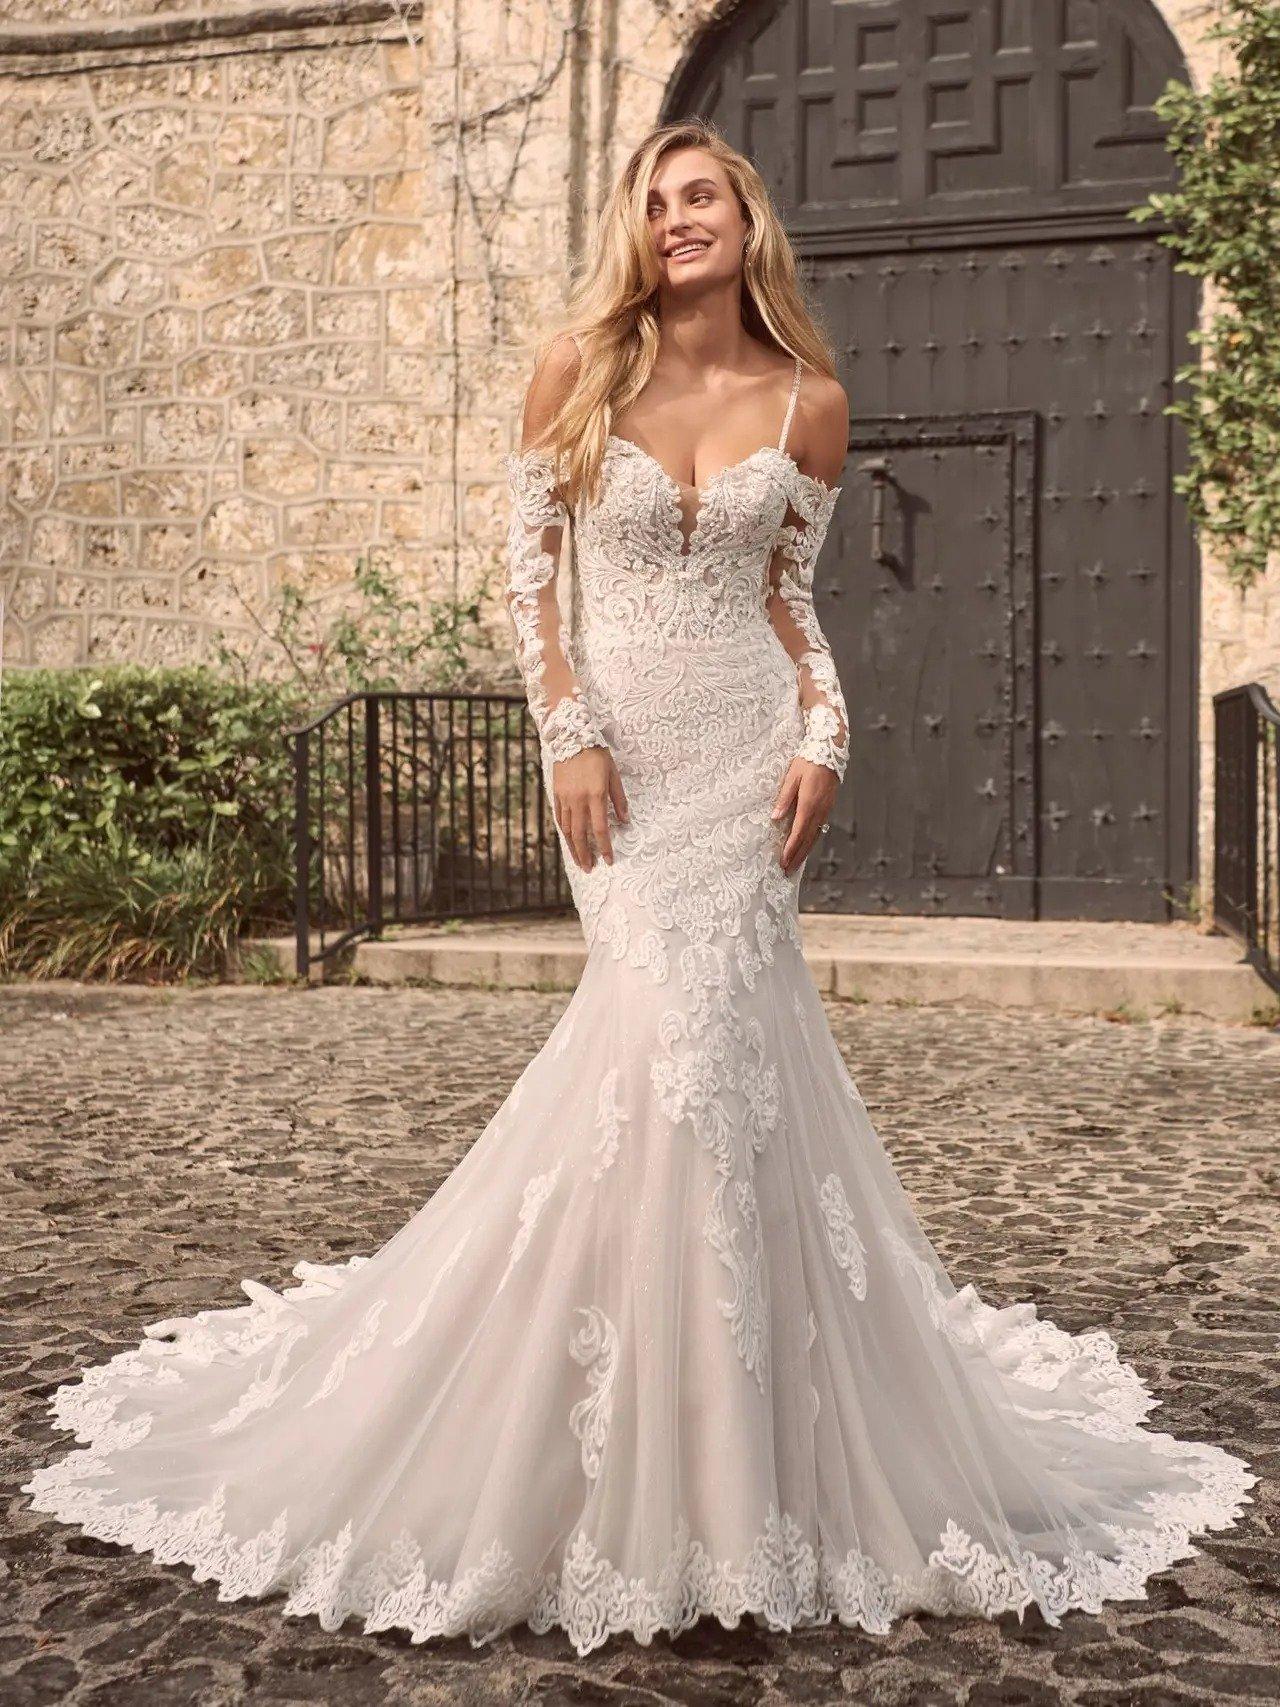 https://cdn0.hitched.co.uk/article/9627/original/1280/jpg/137269-lace-sequin-long-sleeved-wedding-dress.jpeg